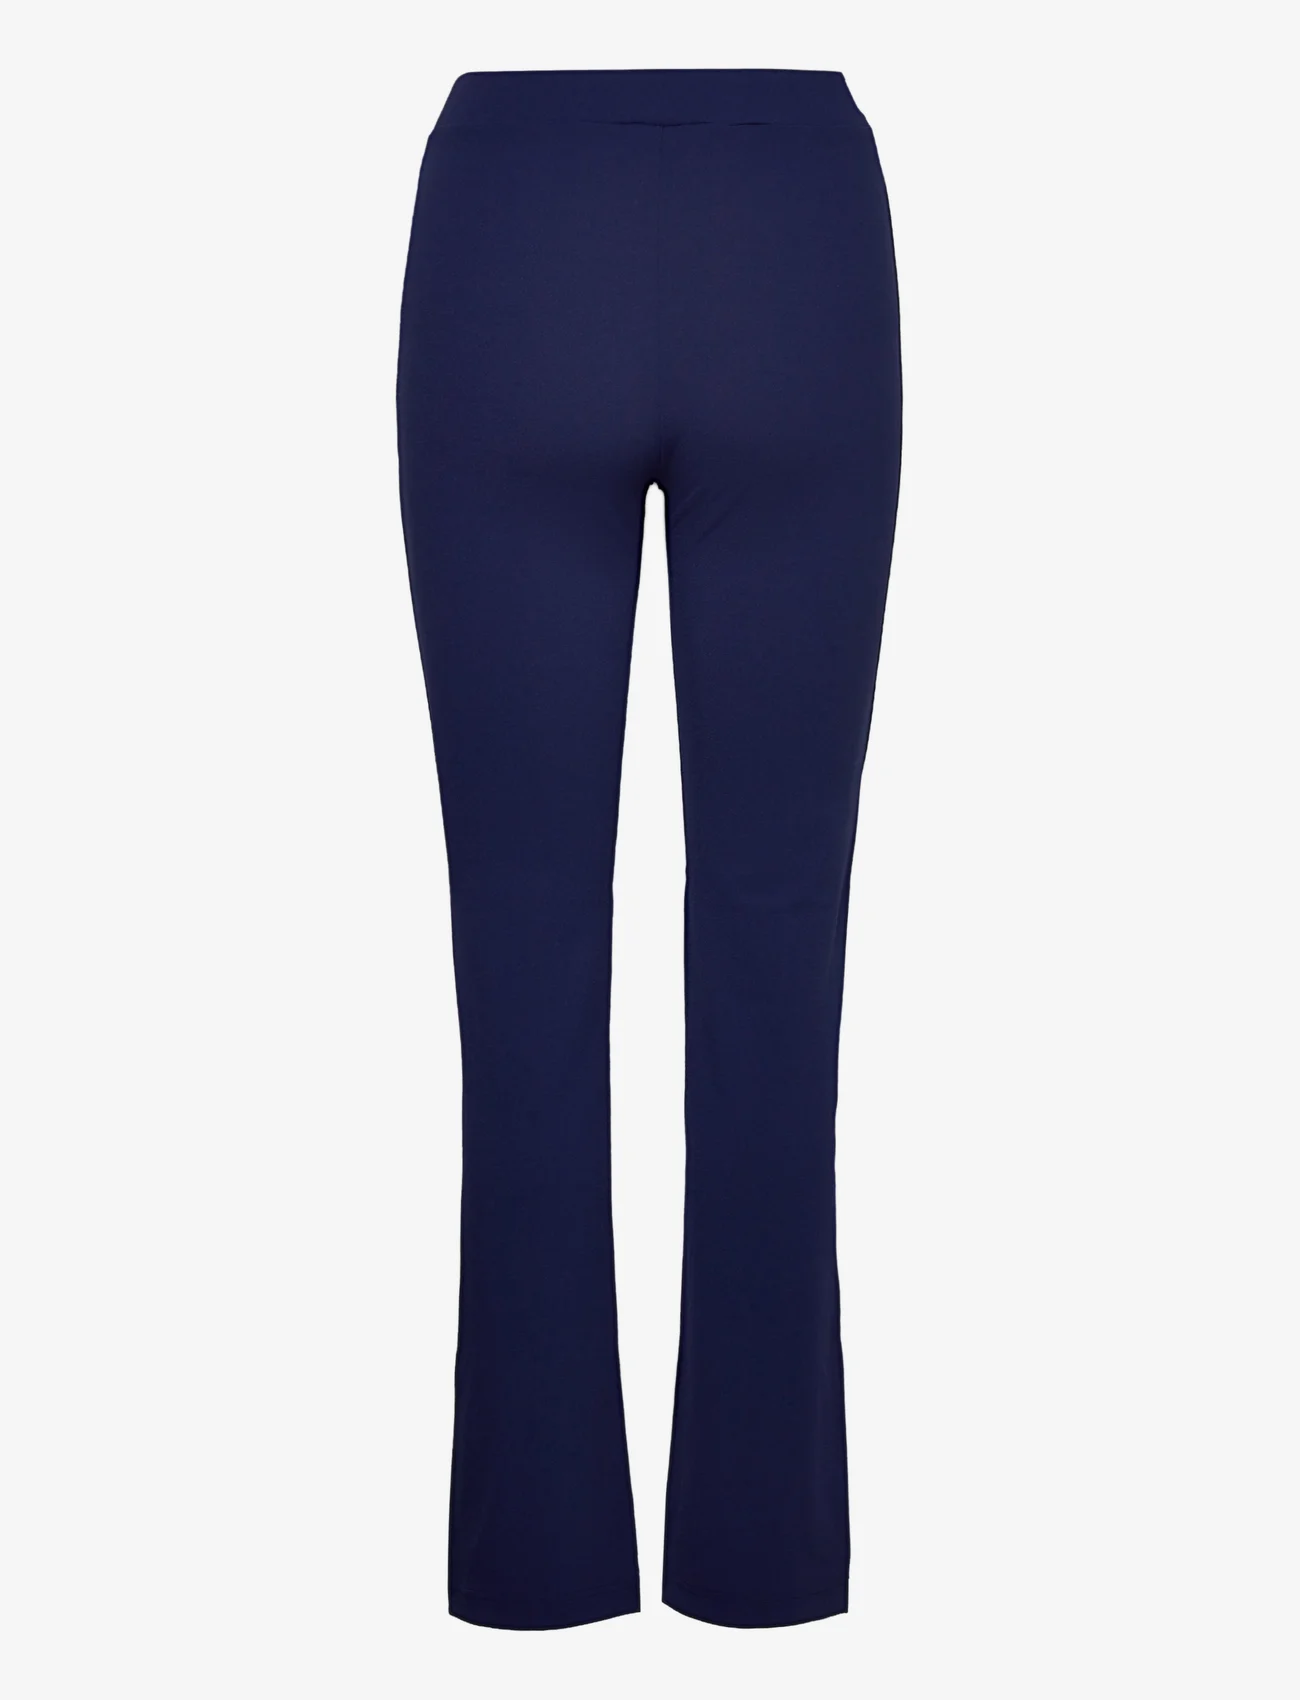 FILA - TRANI flare pants with slit - sportsbukser - medieval blue - 1